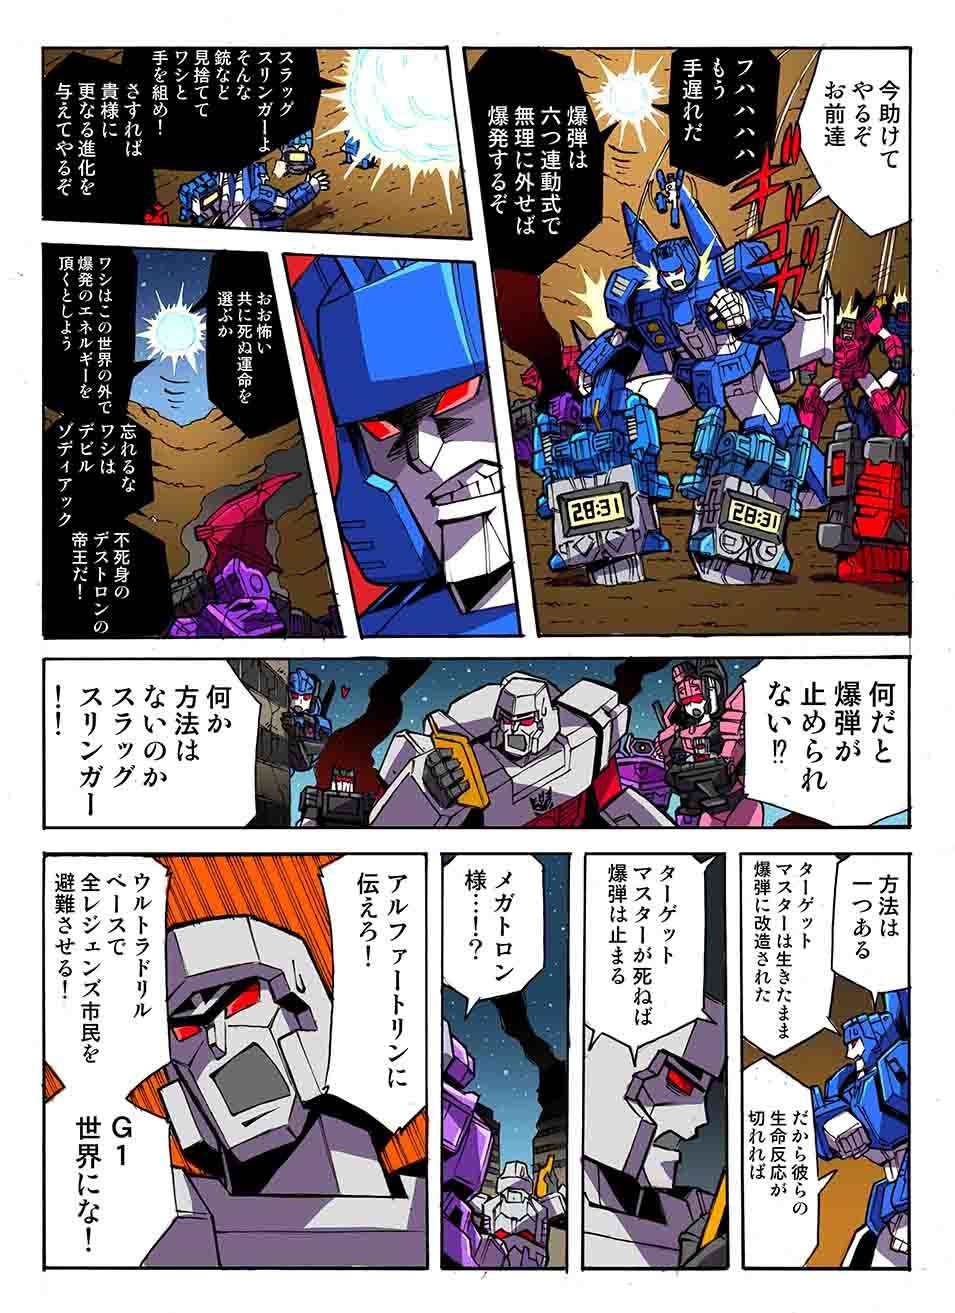 Transformers News: Takara Tomy Transformers Legends Manga Chapter 53 Now Online